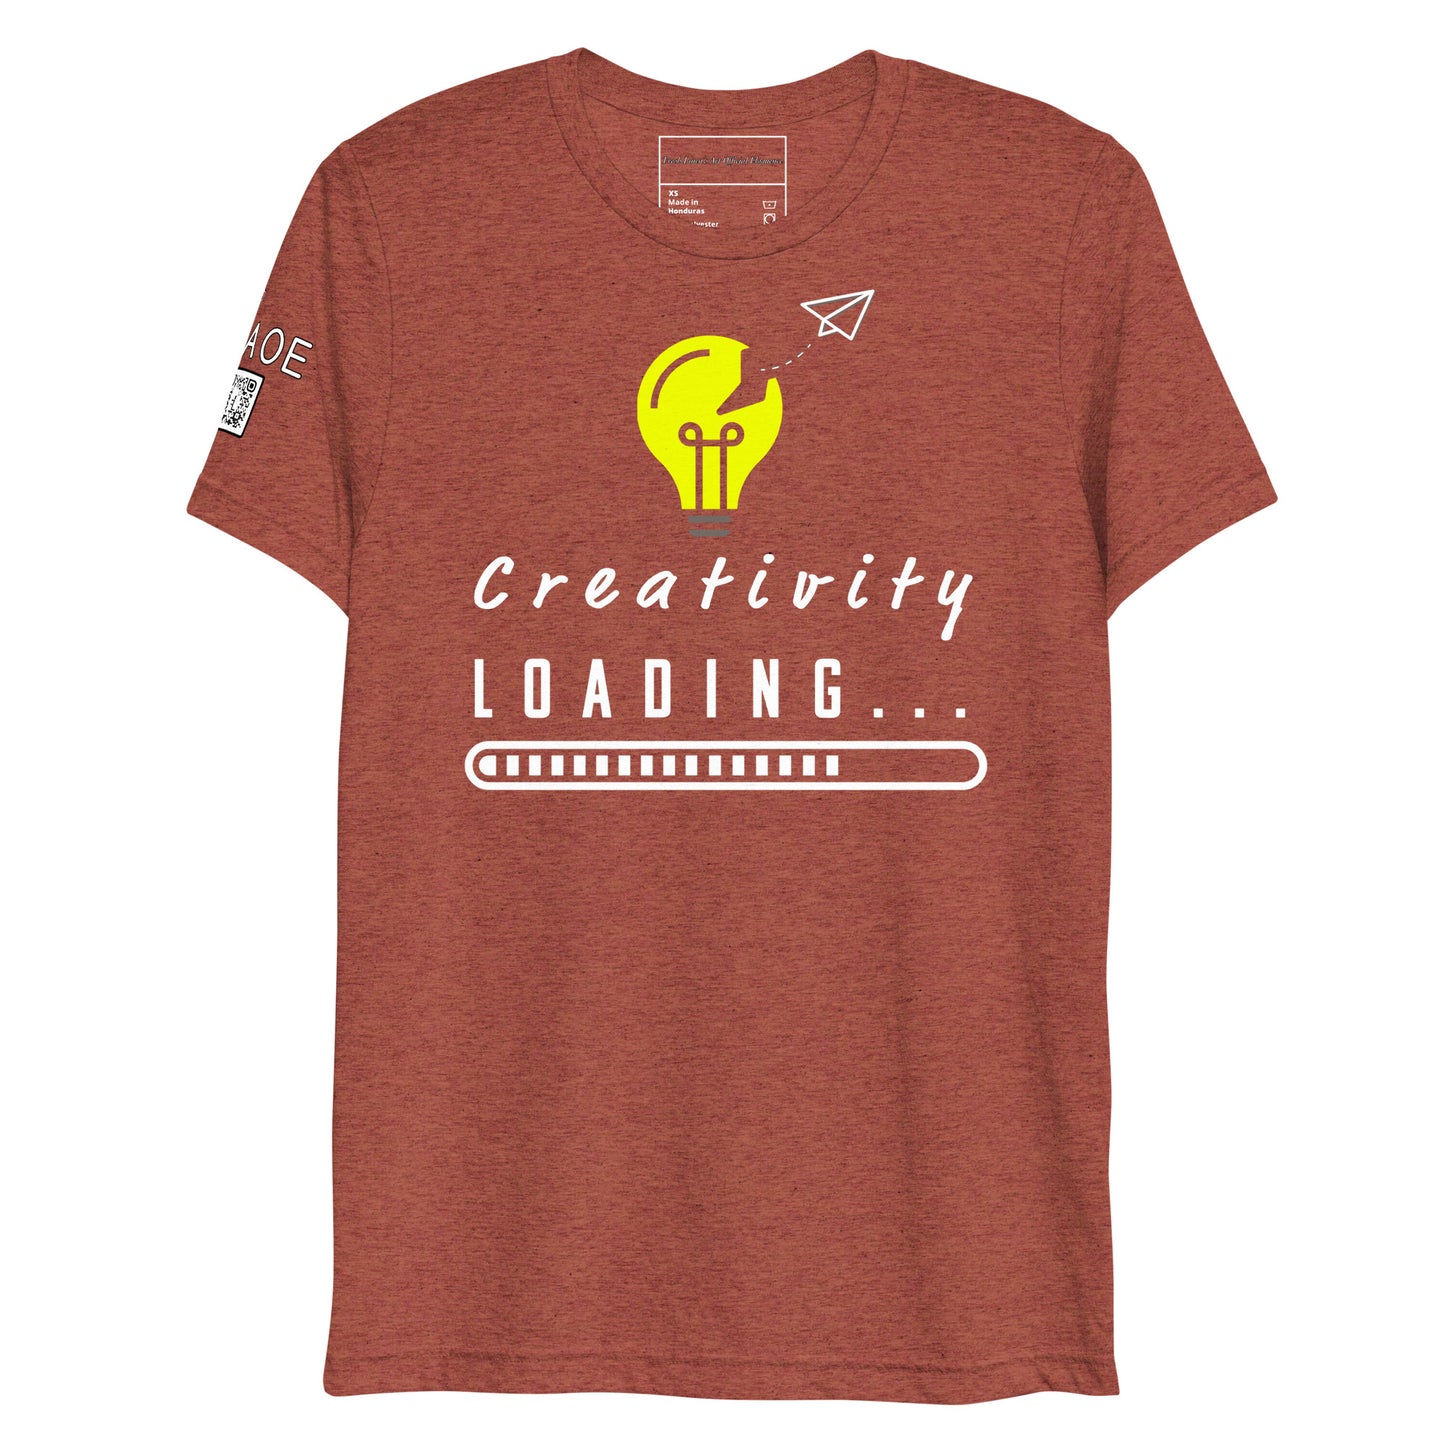 Creativity Loading... Short sleeve t-shirt